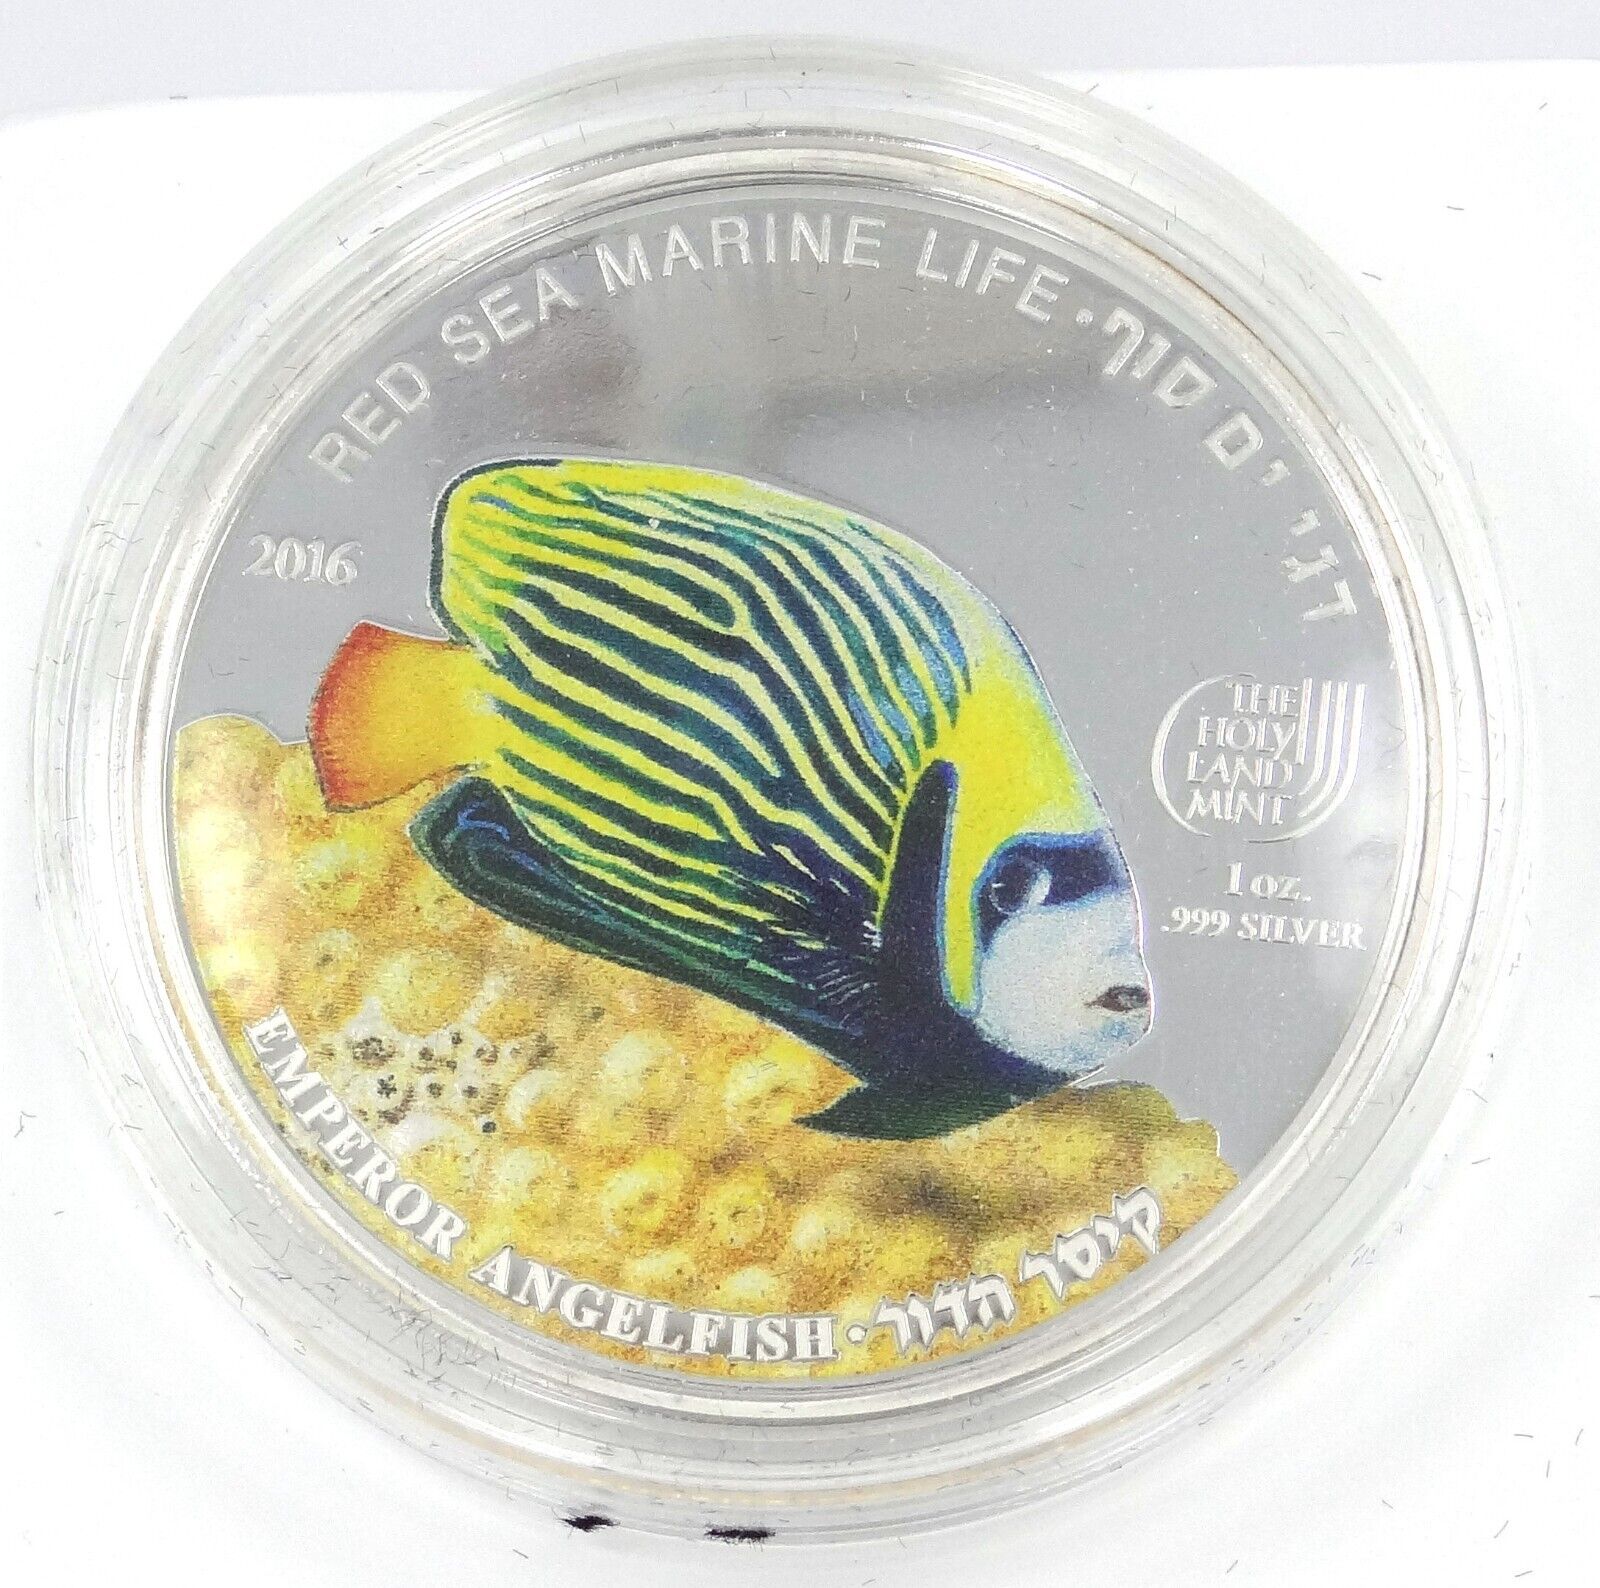 1 Oz Silver Coin 2016 $5 Palau Red Sea Marine Life Israel Mint Emperor Angelfish-classypw.com-1